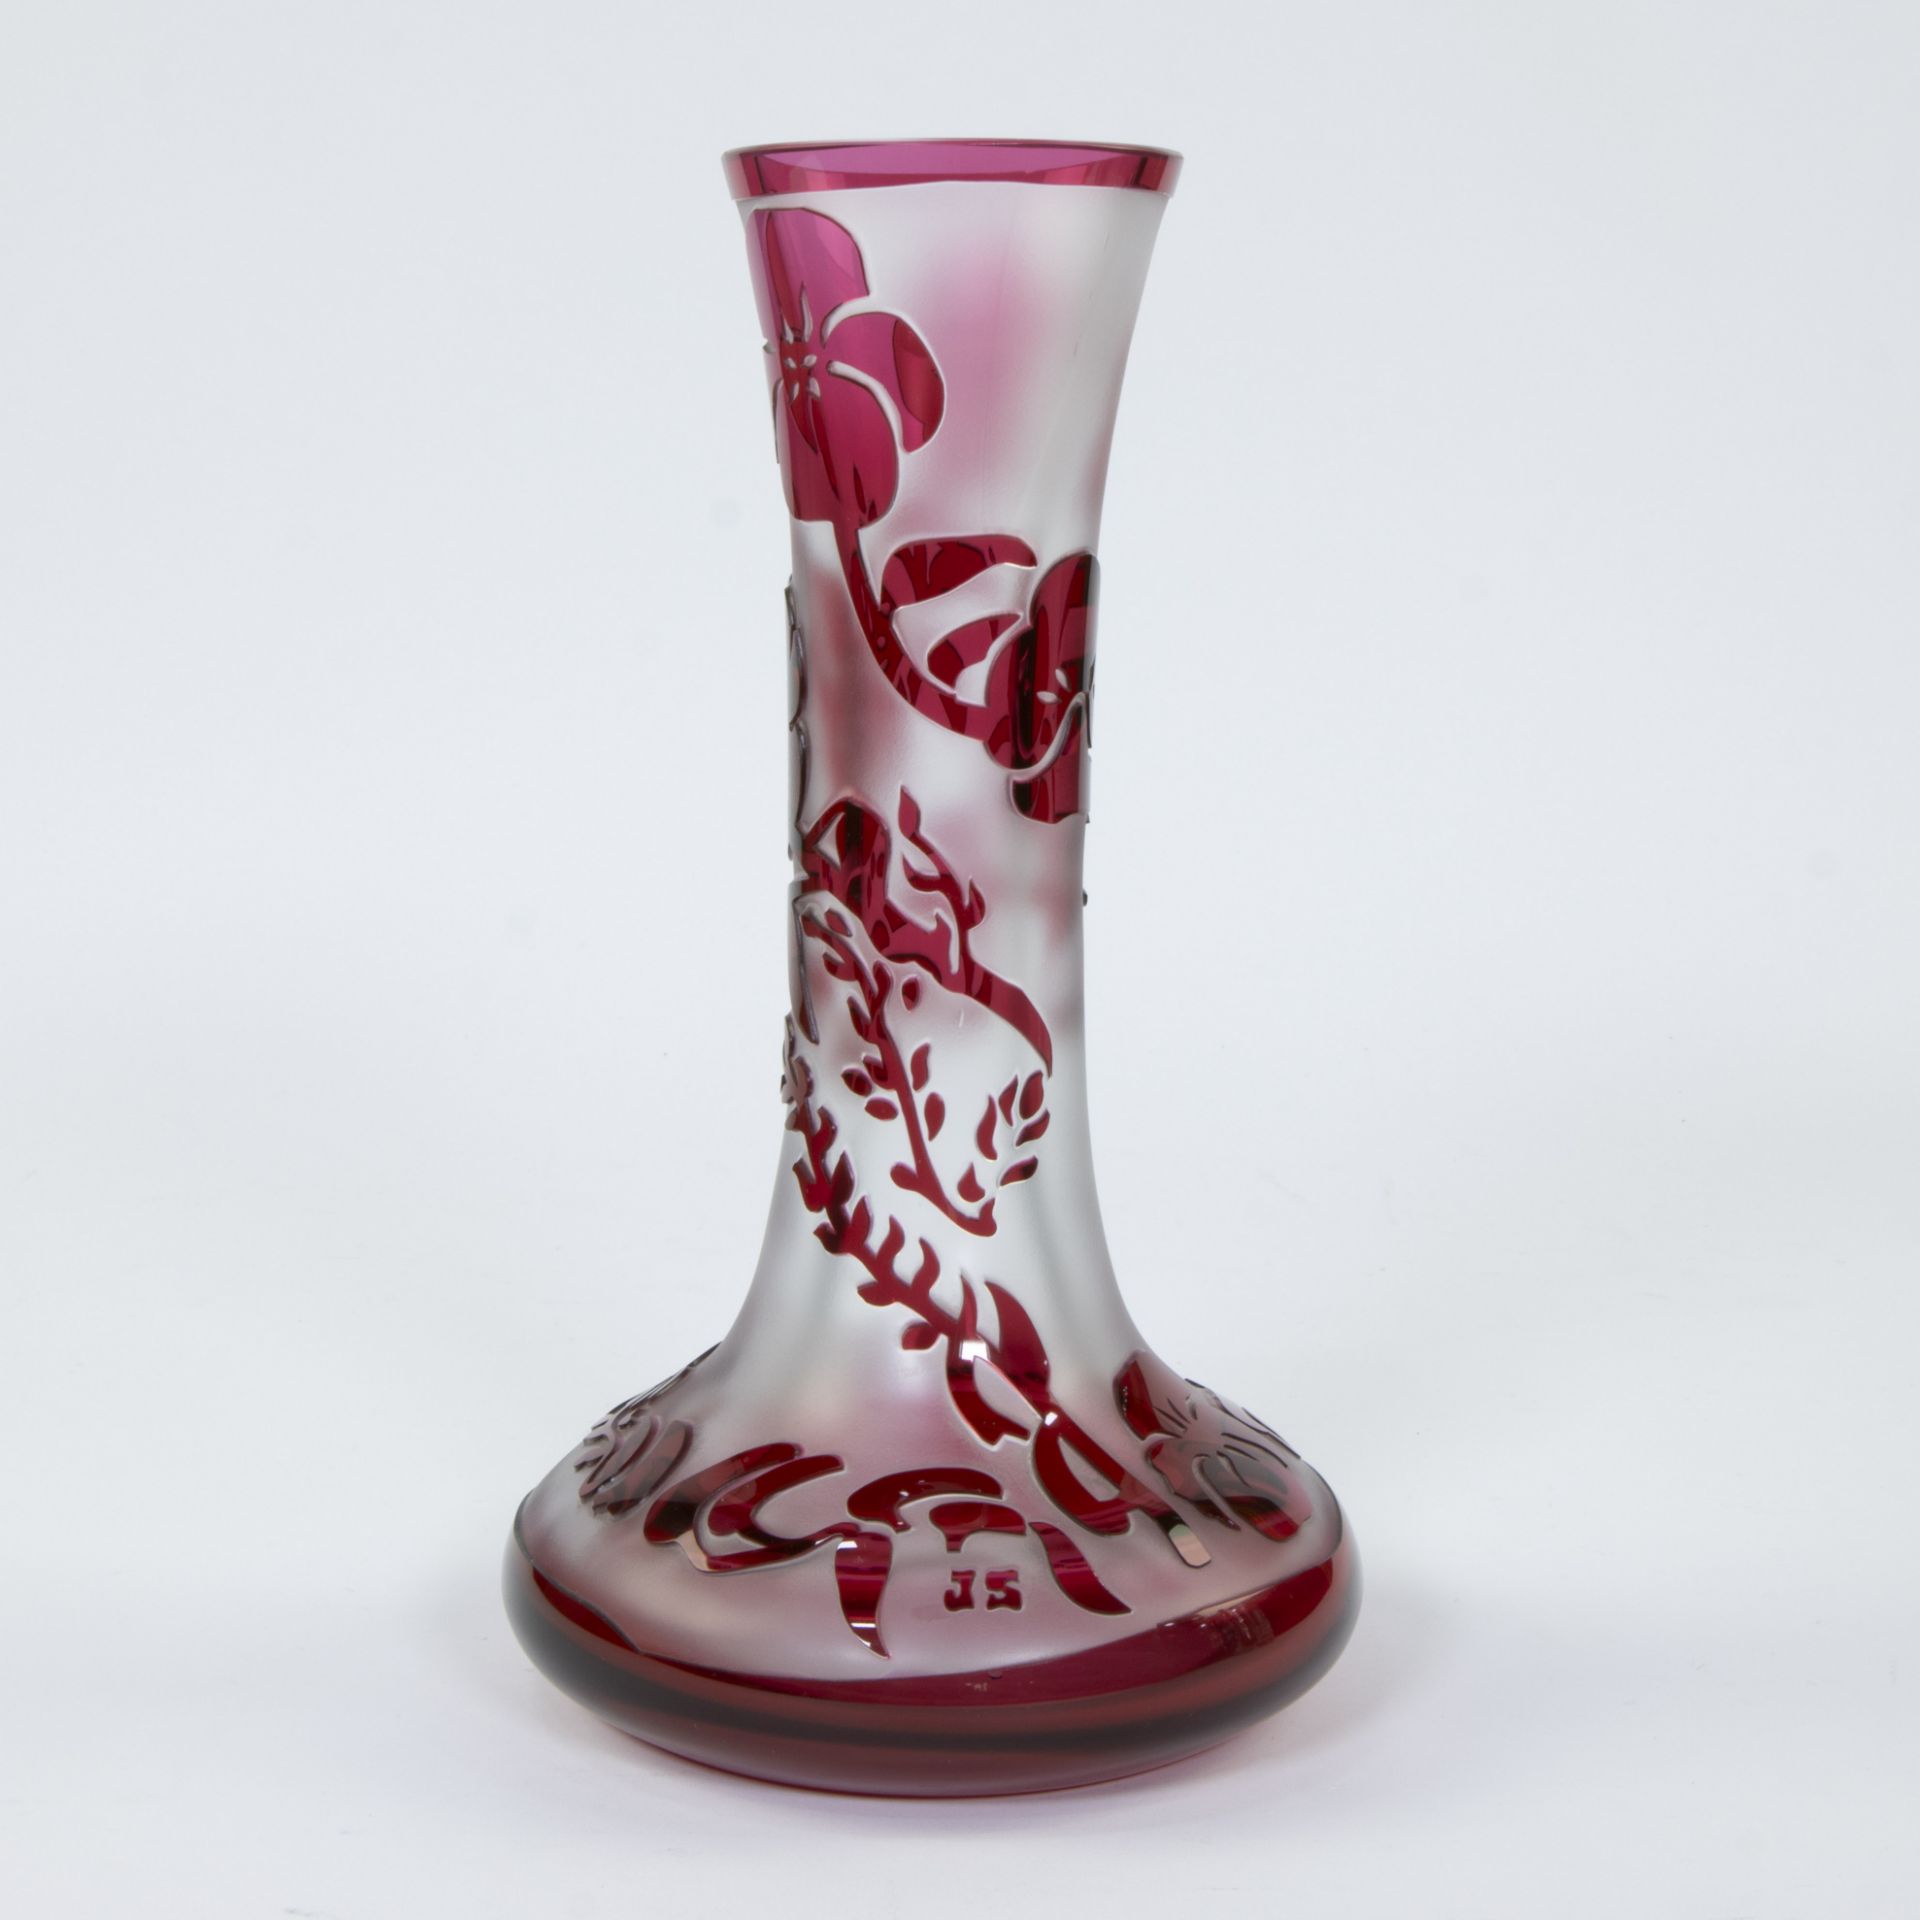 Multi-layered acid etched vase signed VSL for VAL SAINT LAMBERT monogrammed JS for Jacqueline SIMON